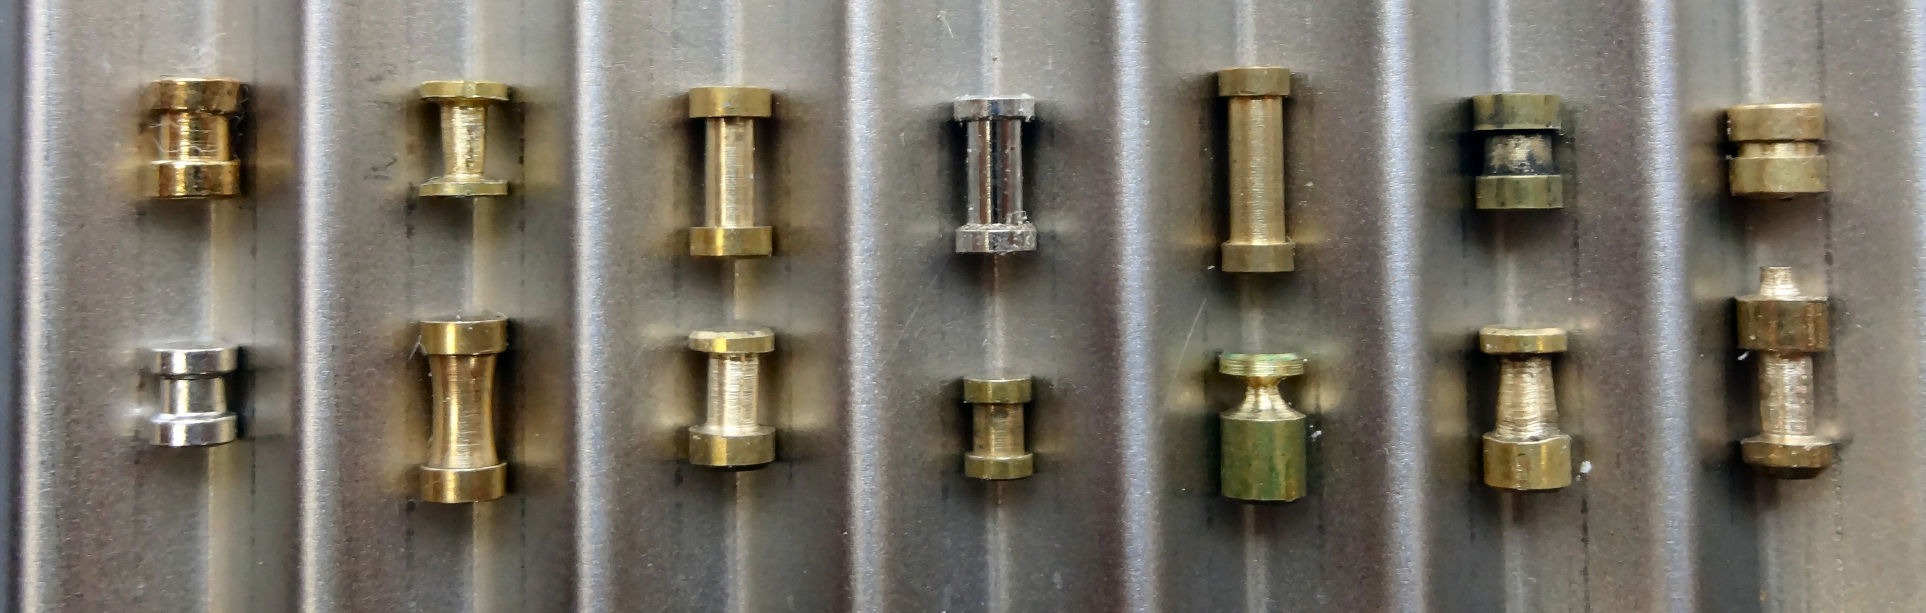 LAB .240" Lock Spool Pins High Security Pins Suits Lockwood Locksport 